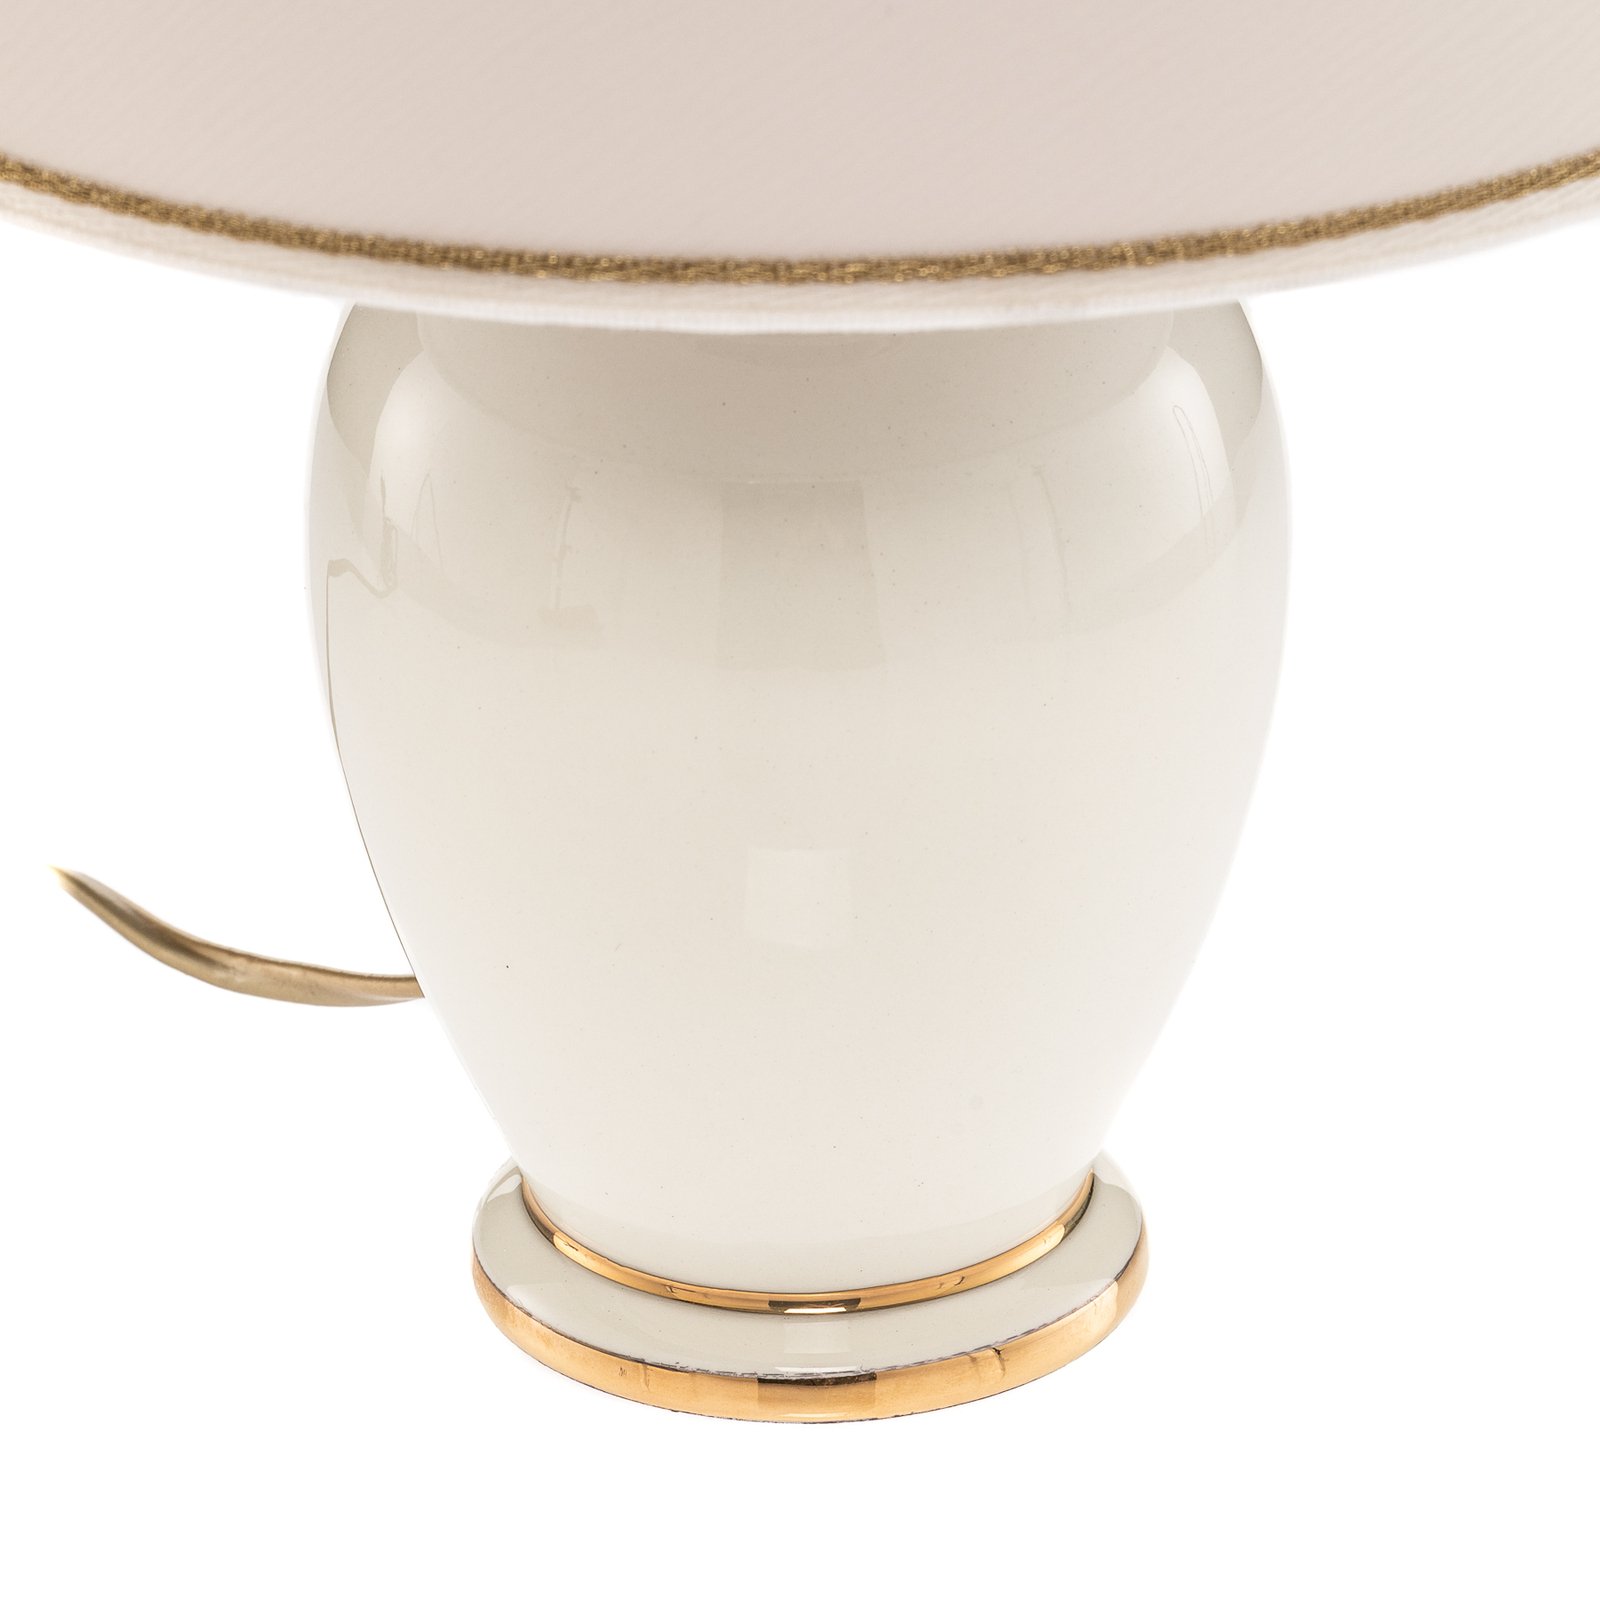 Tafellamp Giardino Avorio in wit-goud, Ø 25 cm